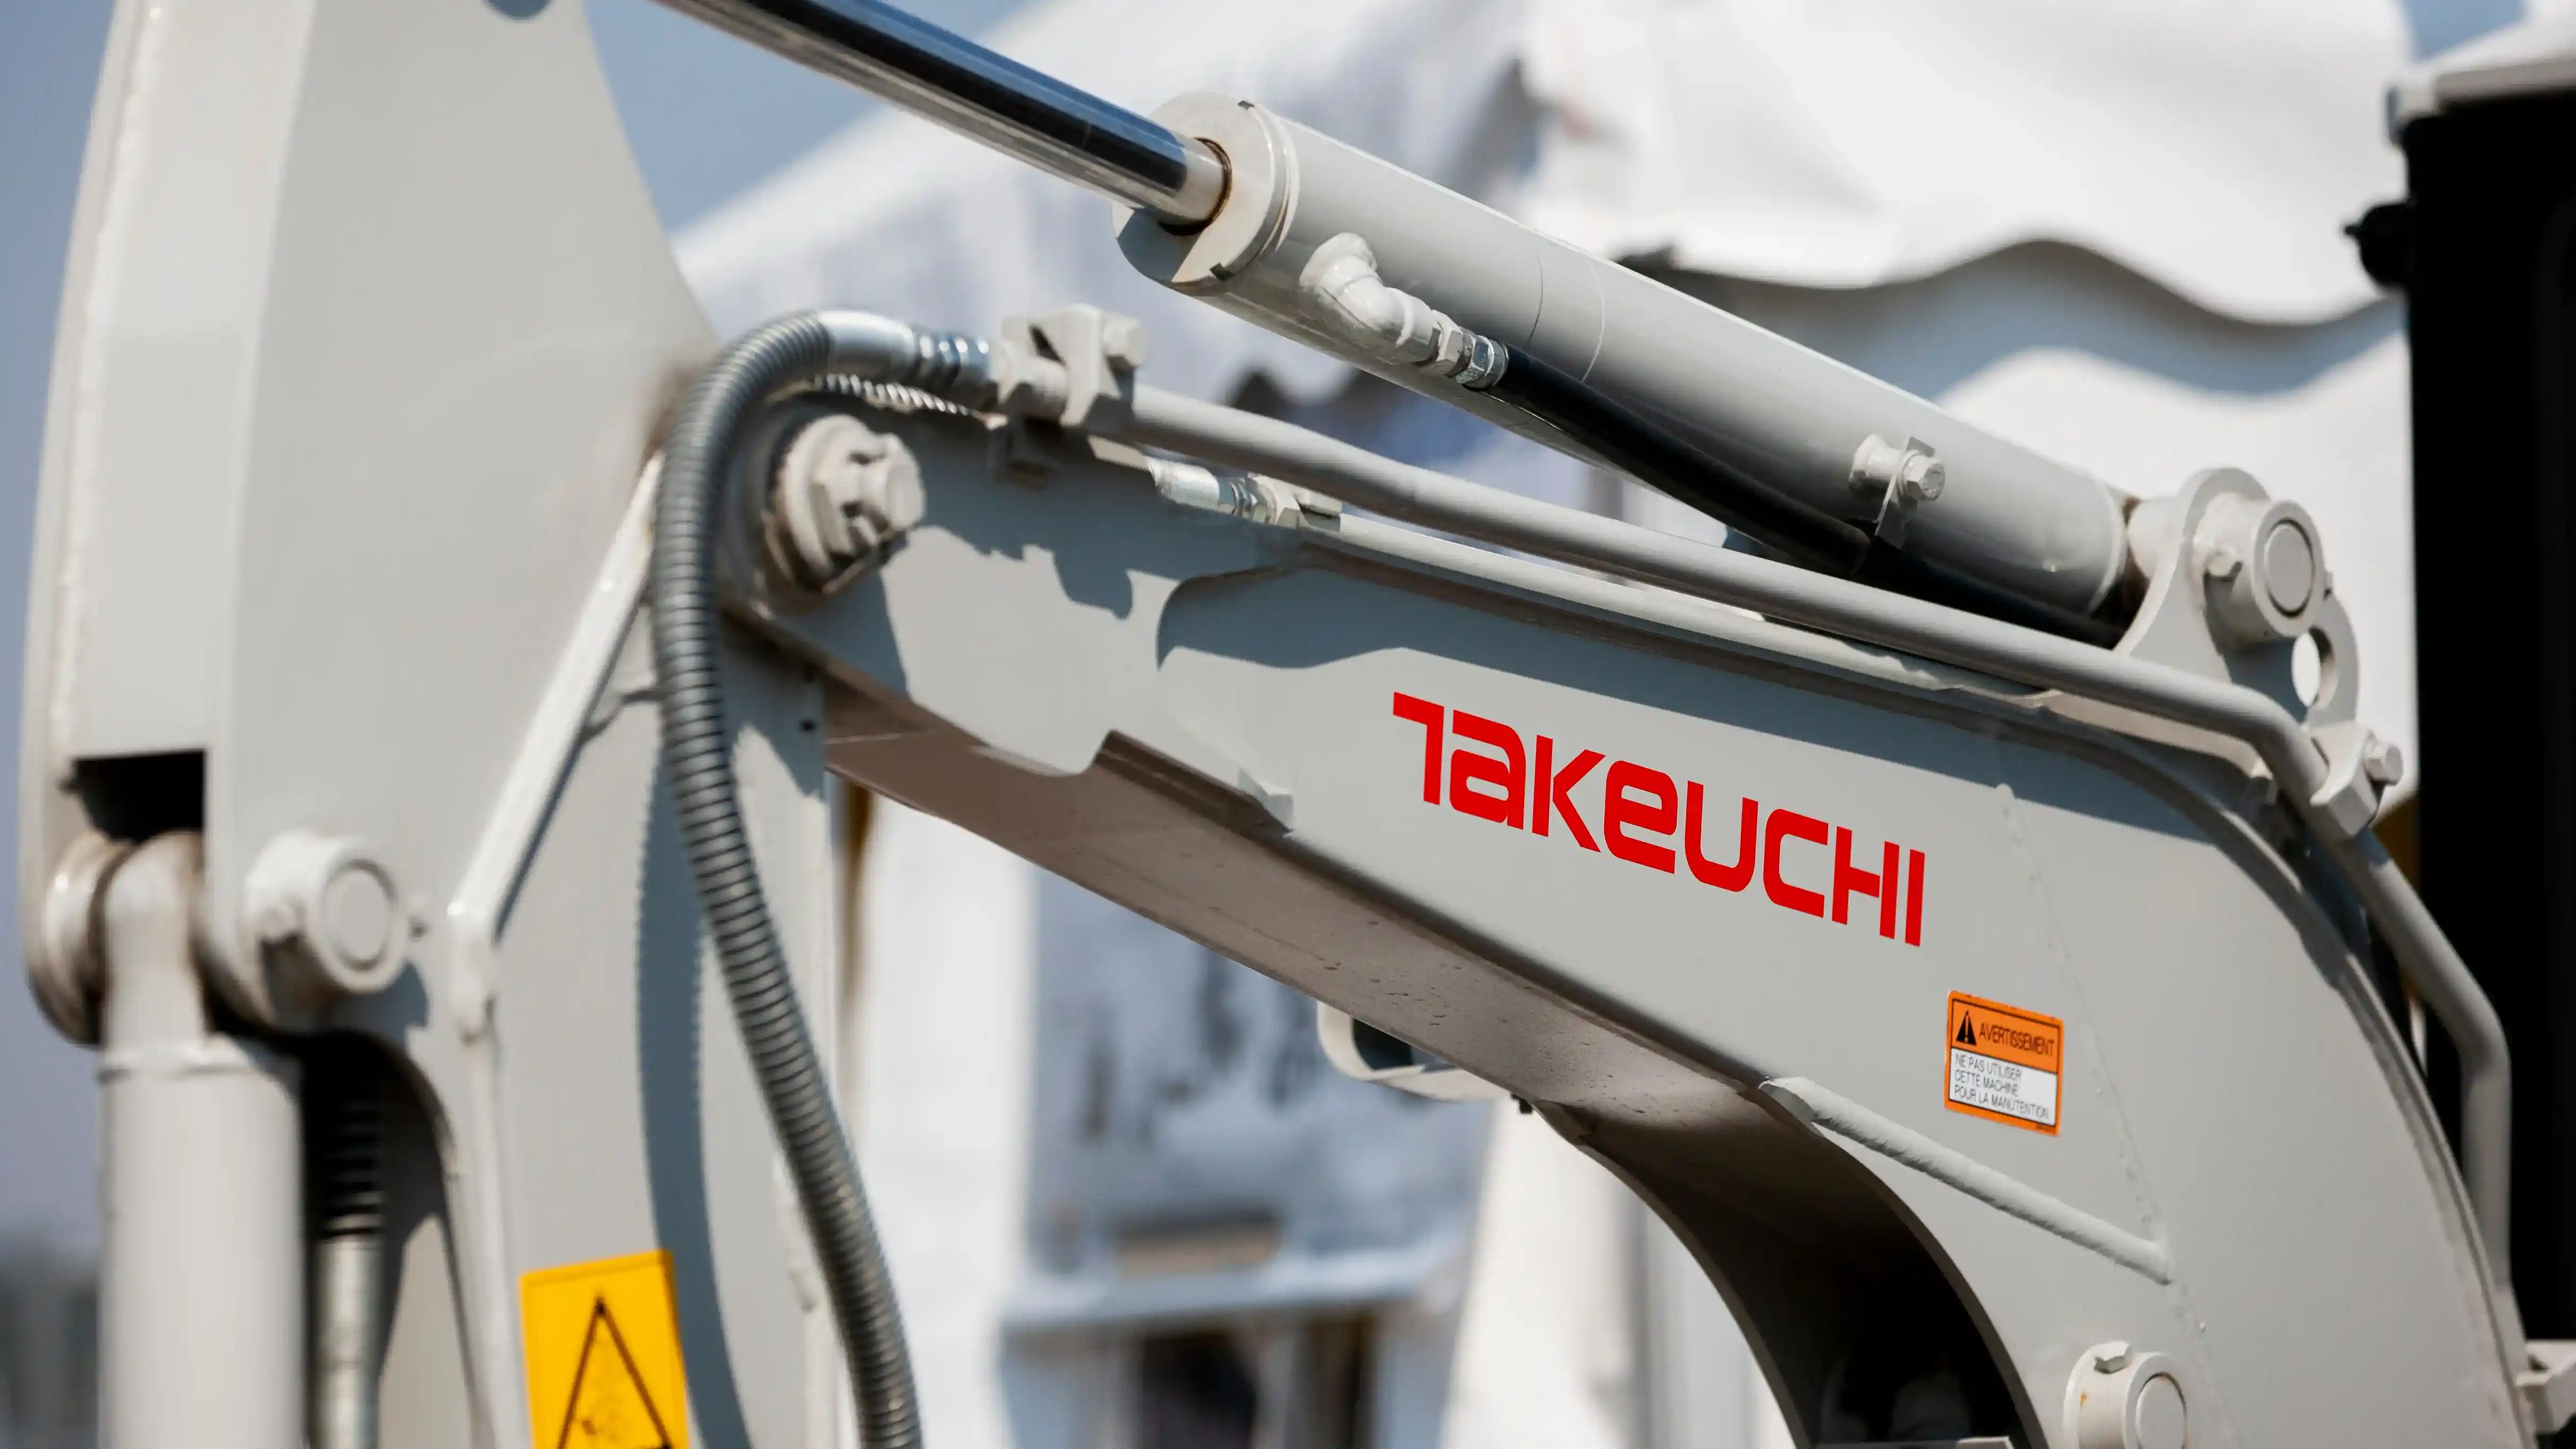 Takeuchi heavy machine closeup sold by Semco